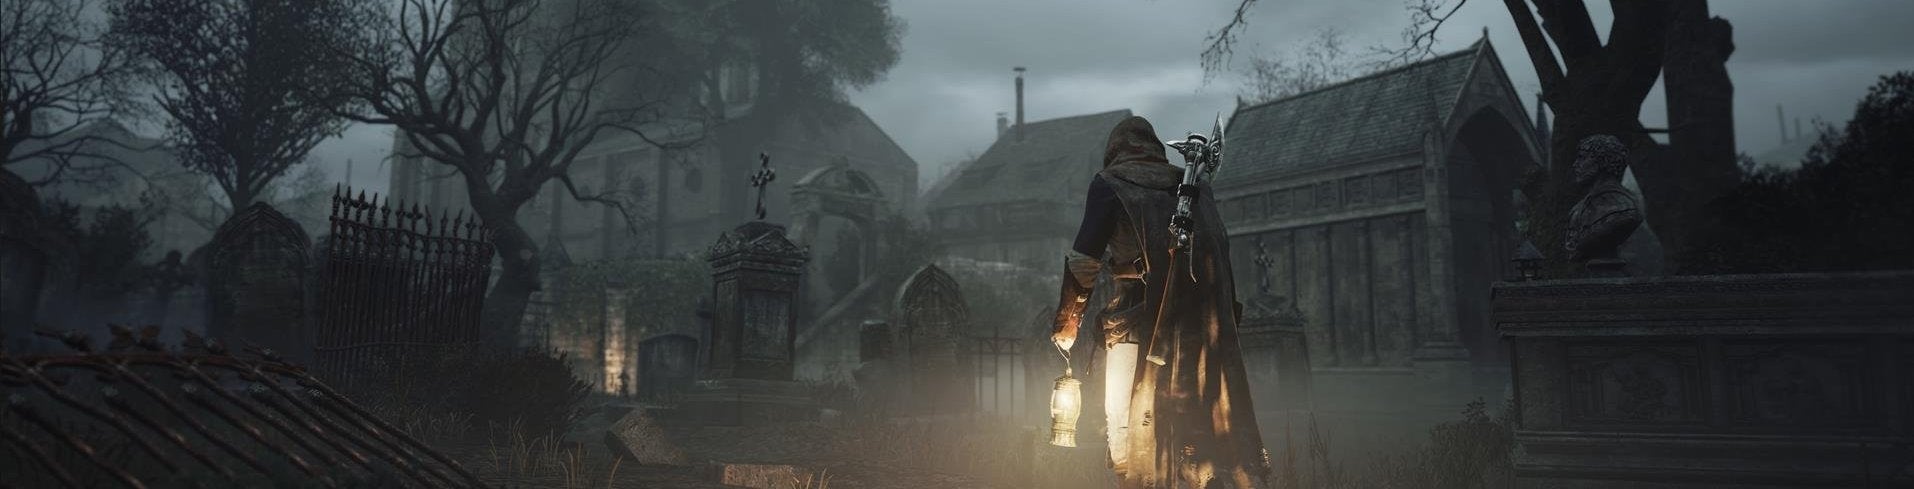 Obrazki dla Assassin's Creed Unity: Dead Kings DLC - Recenzja